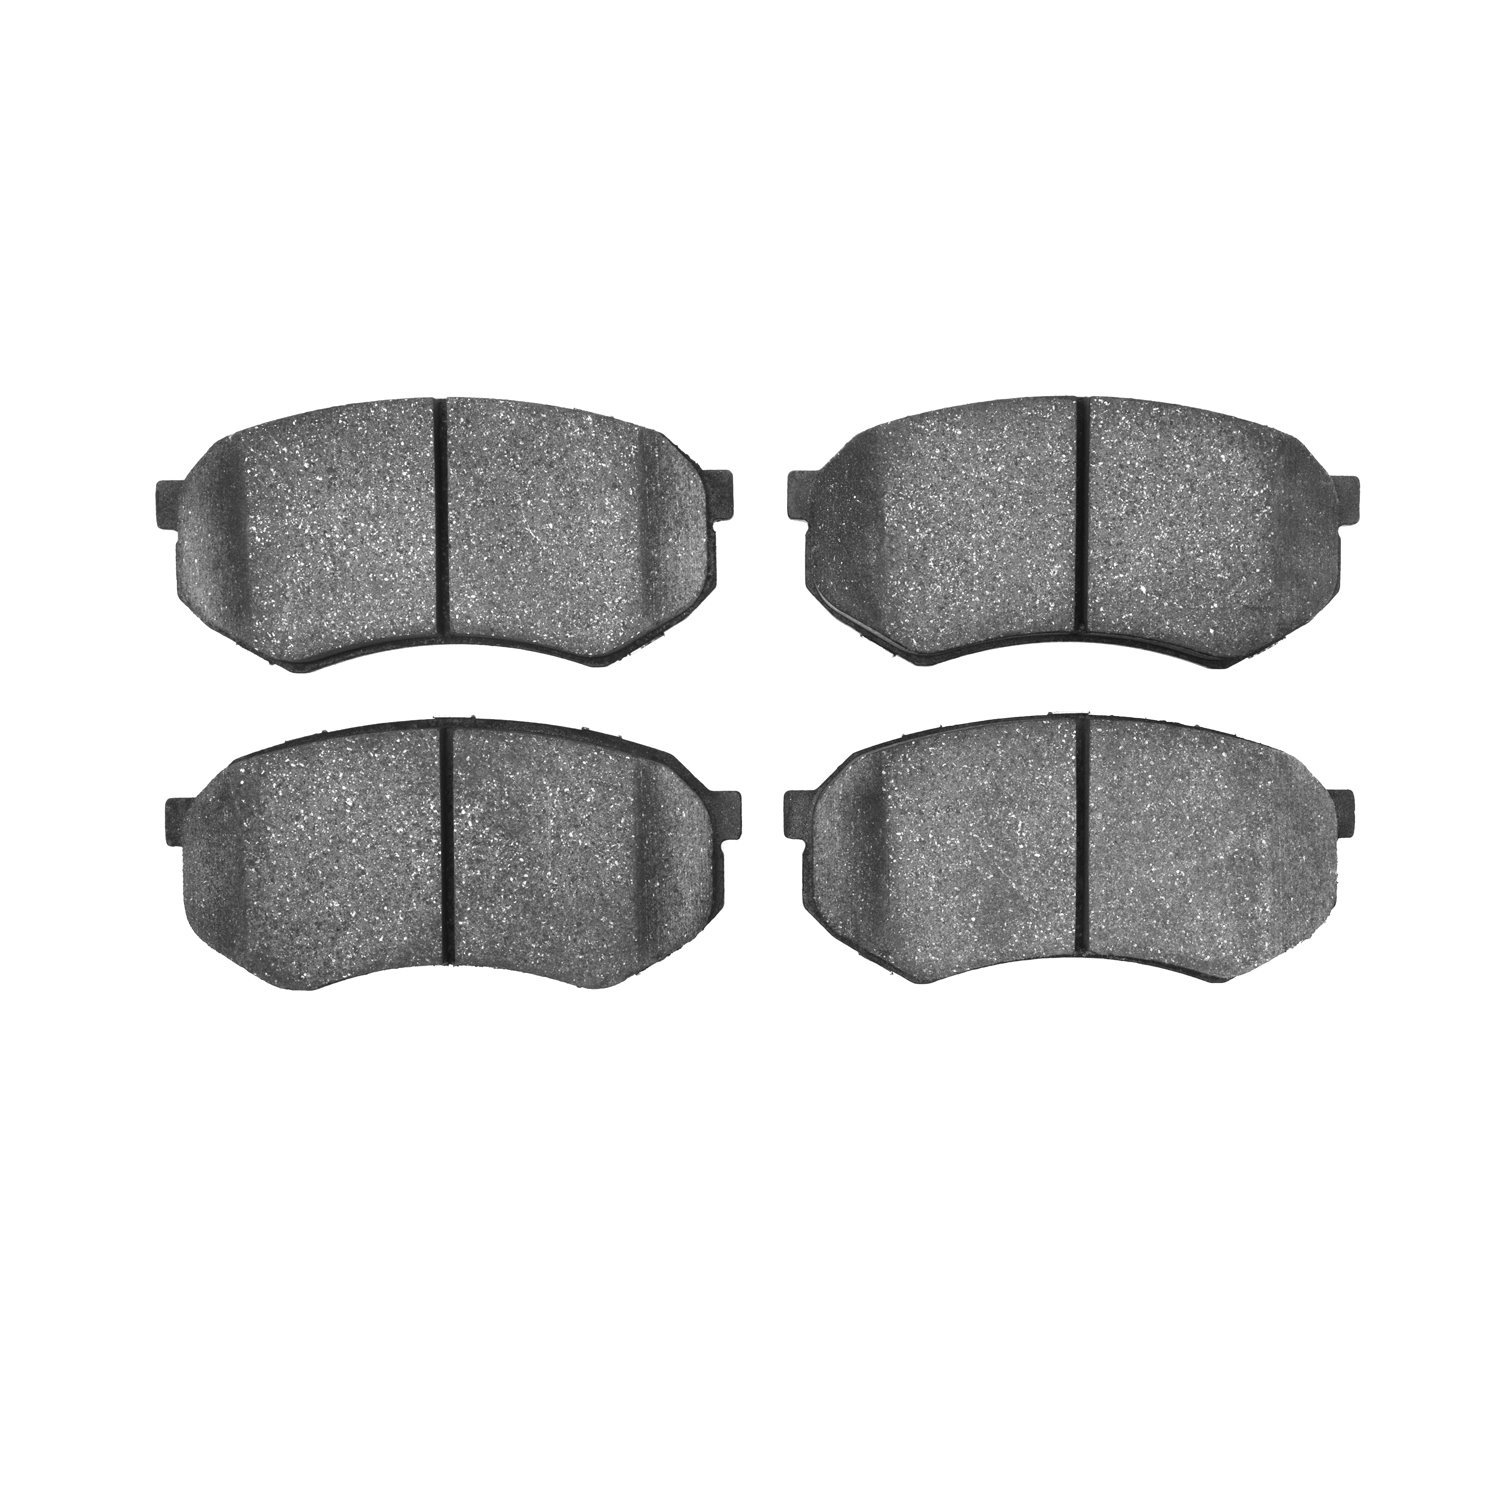 Semi-Metallic Brake Pads, 1989-2005 Fits Multiple Makes/Models, Position: Front